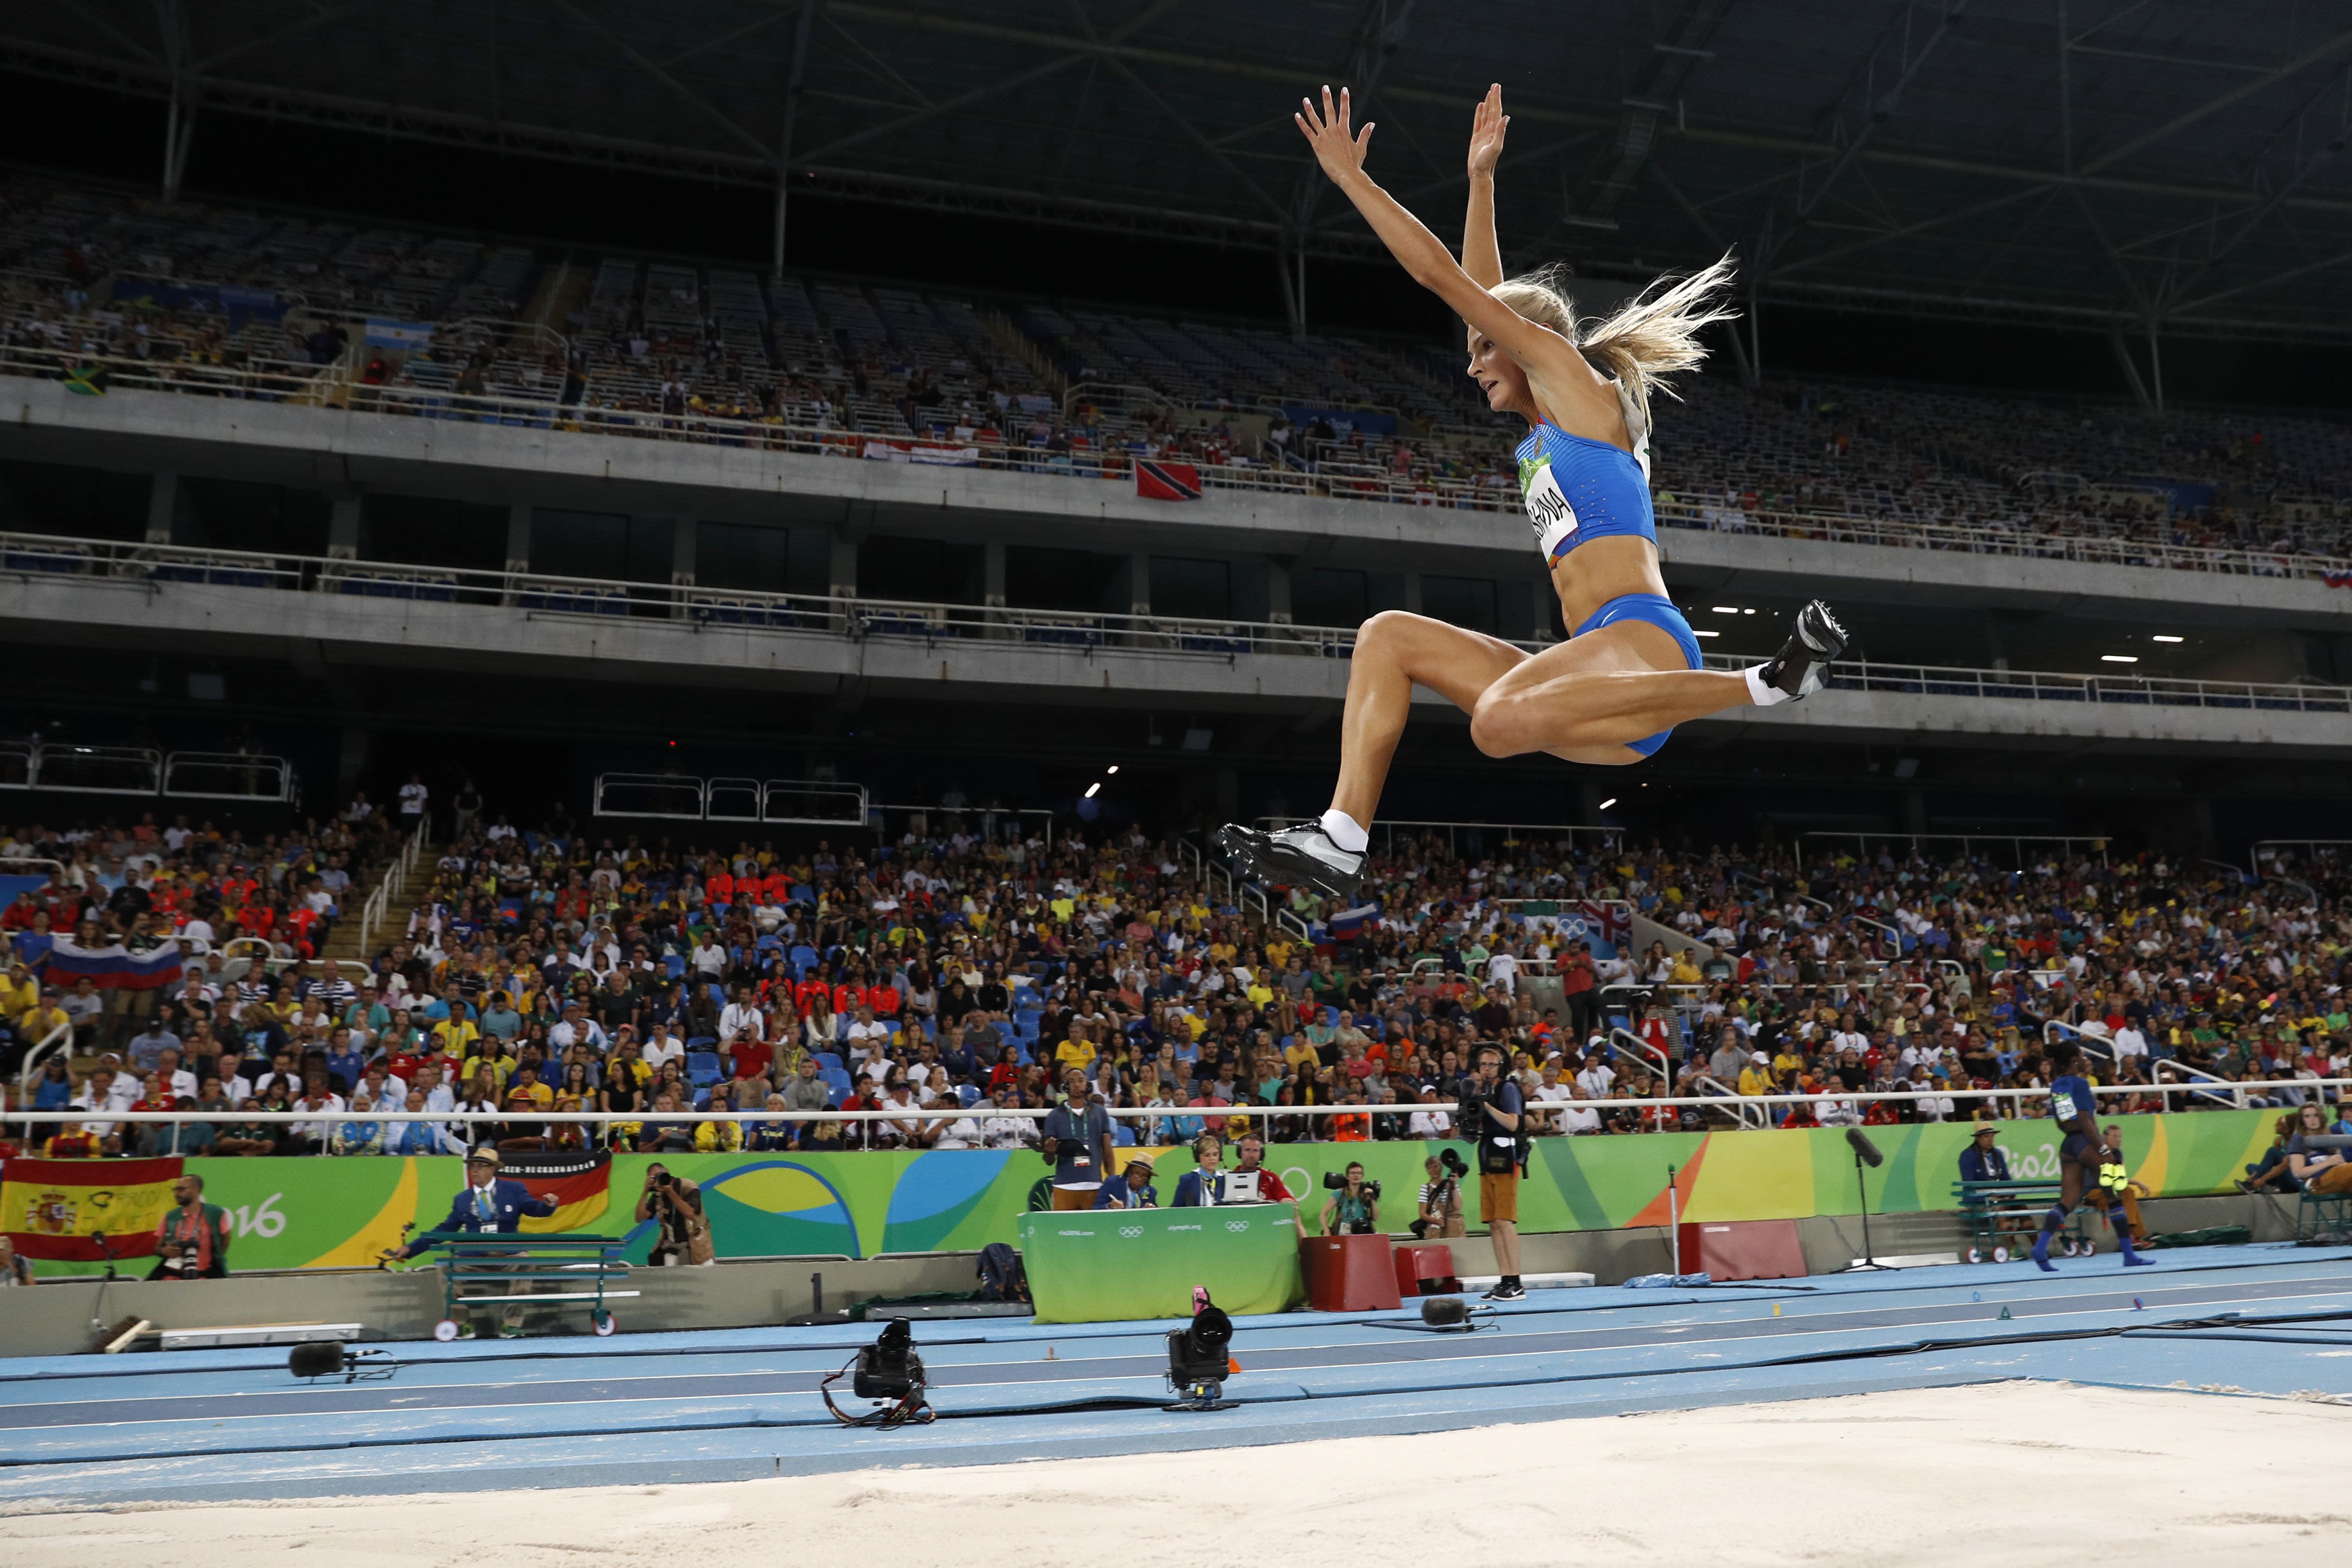 Russian long jumper Darya Klishina has won gold in her event in